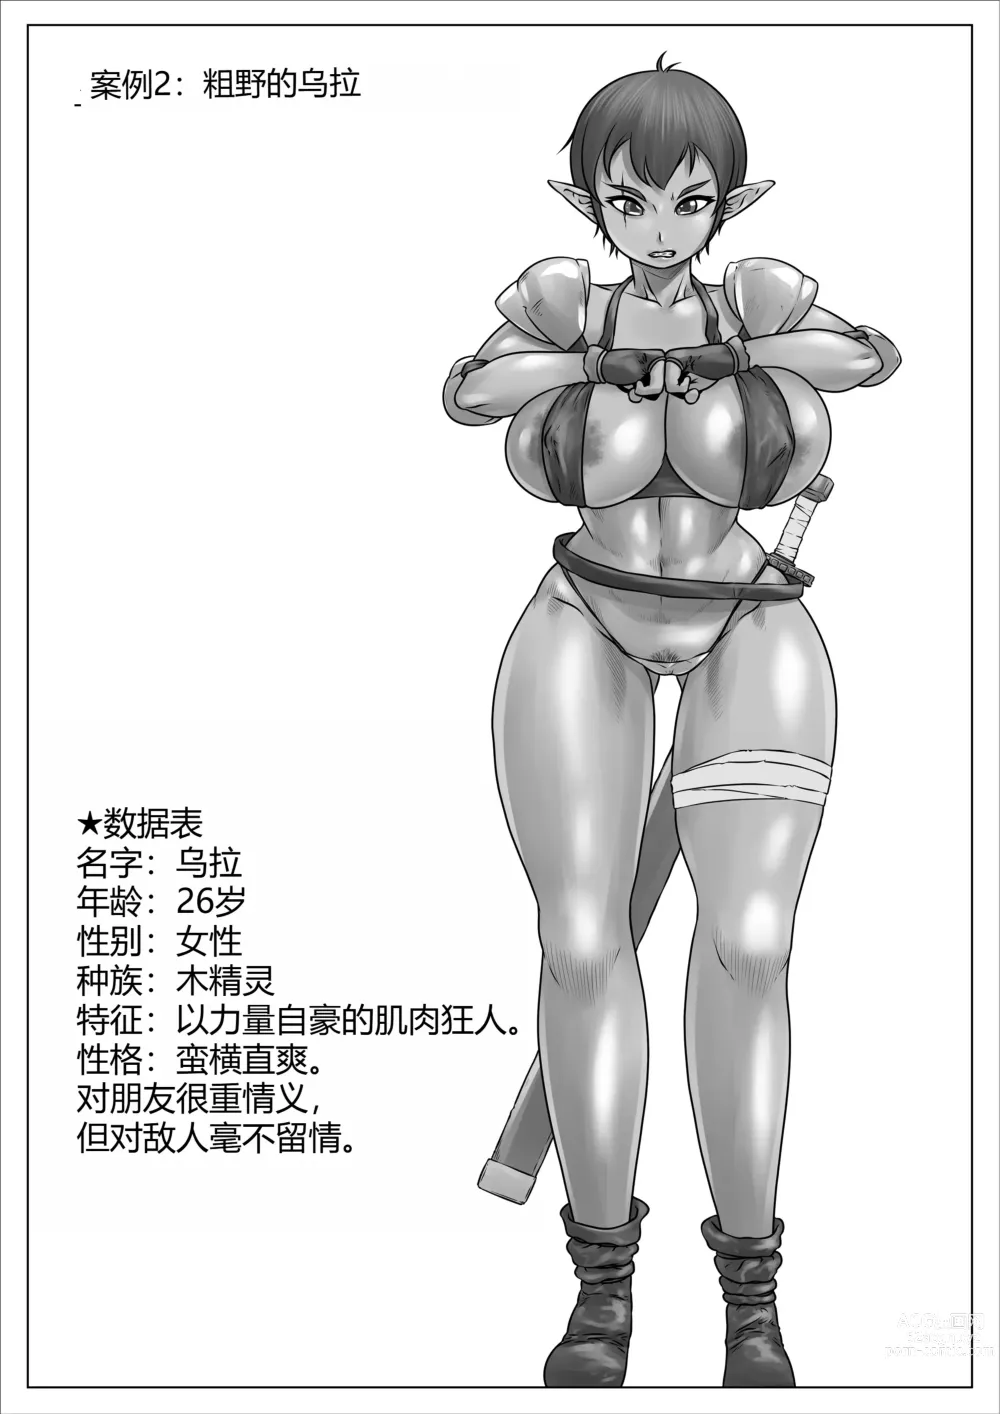 Page 2 of doujinshi 异世界女精灵被打败了